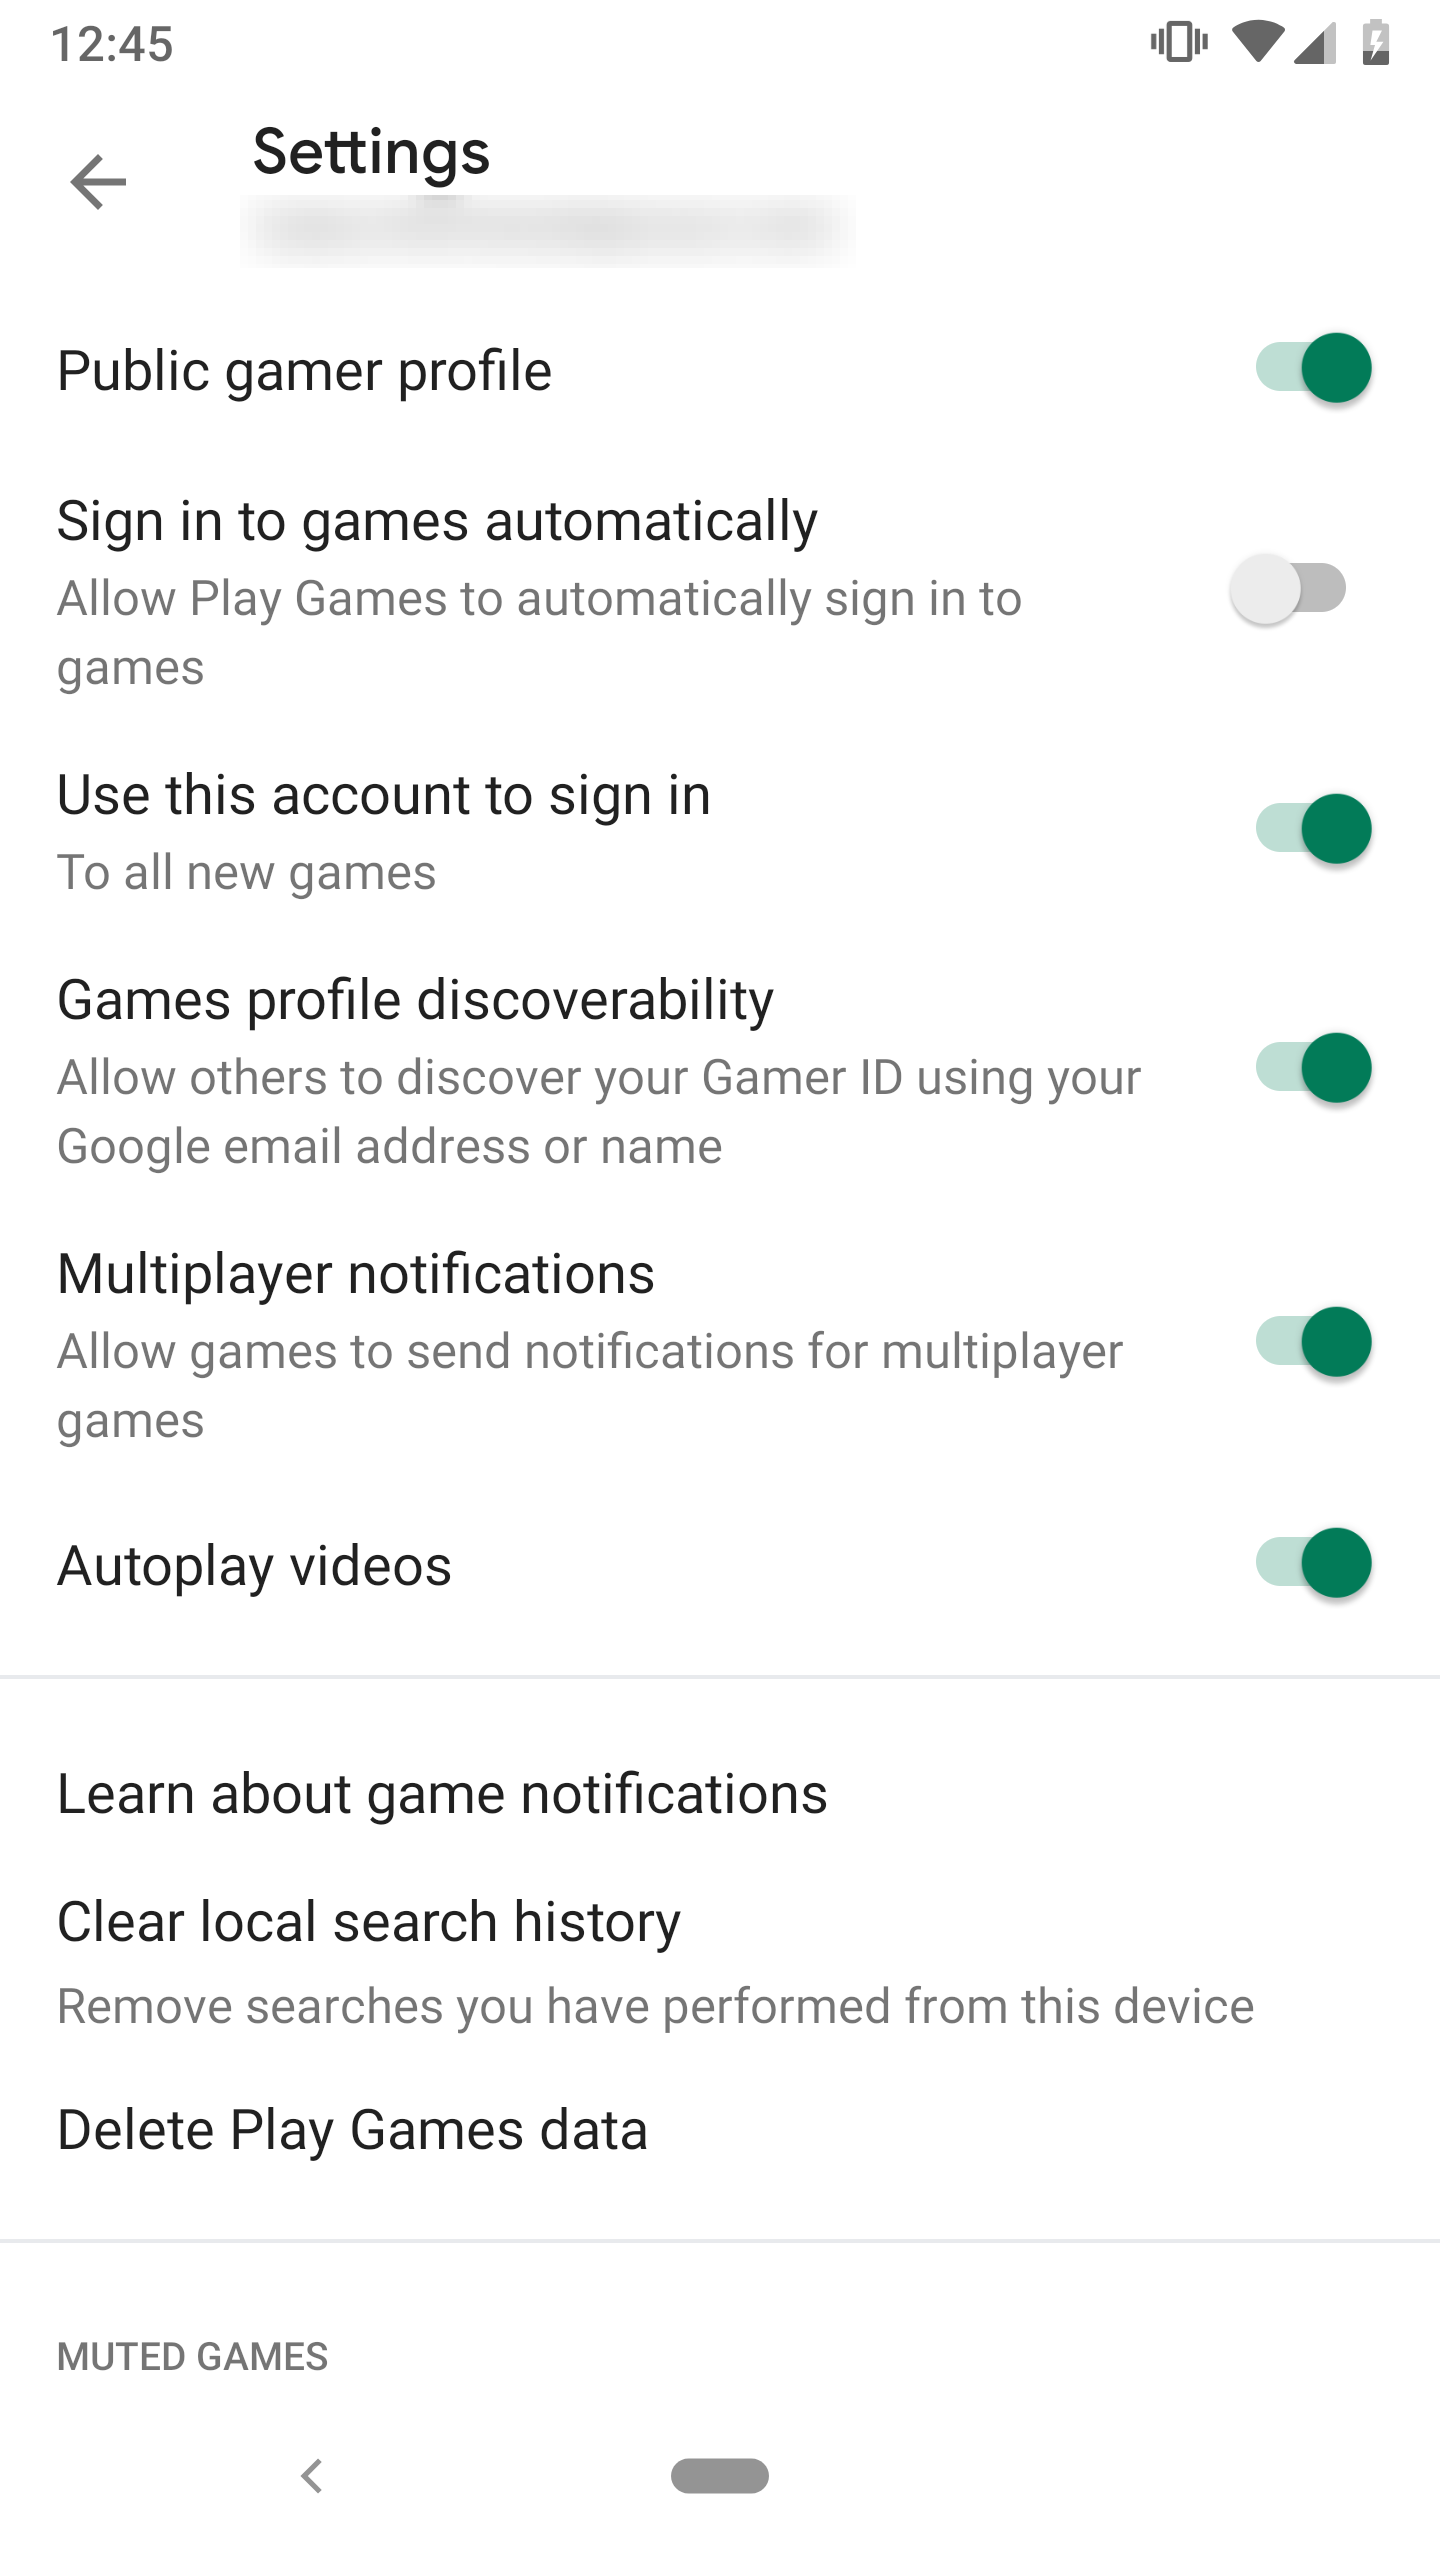 Google Play Games update brings Search, Snake game,  videos